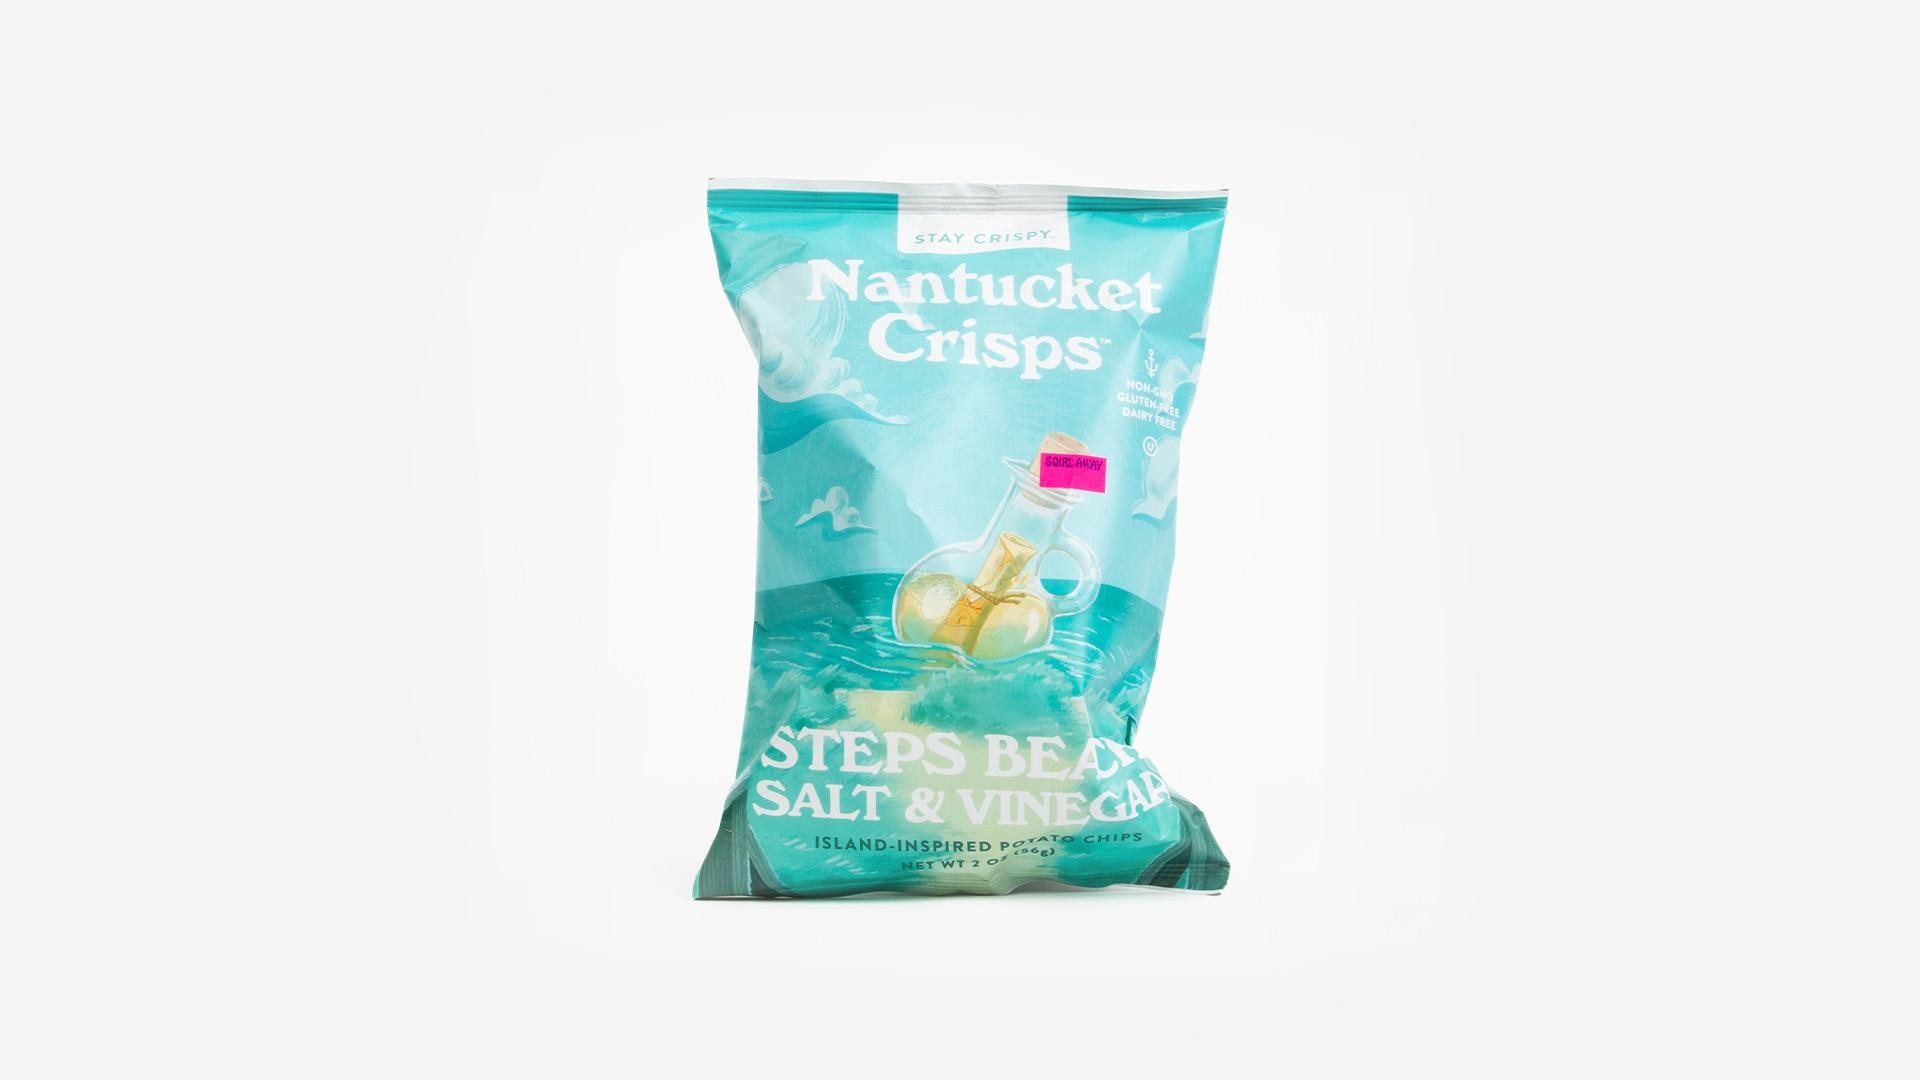 Nantucket Crisps Steps Beach Salt & Vinegar Chips